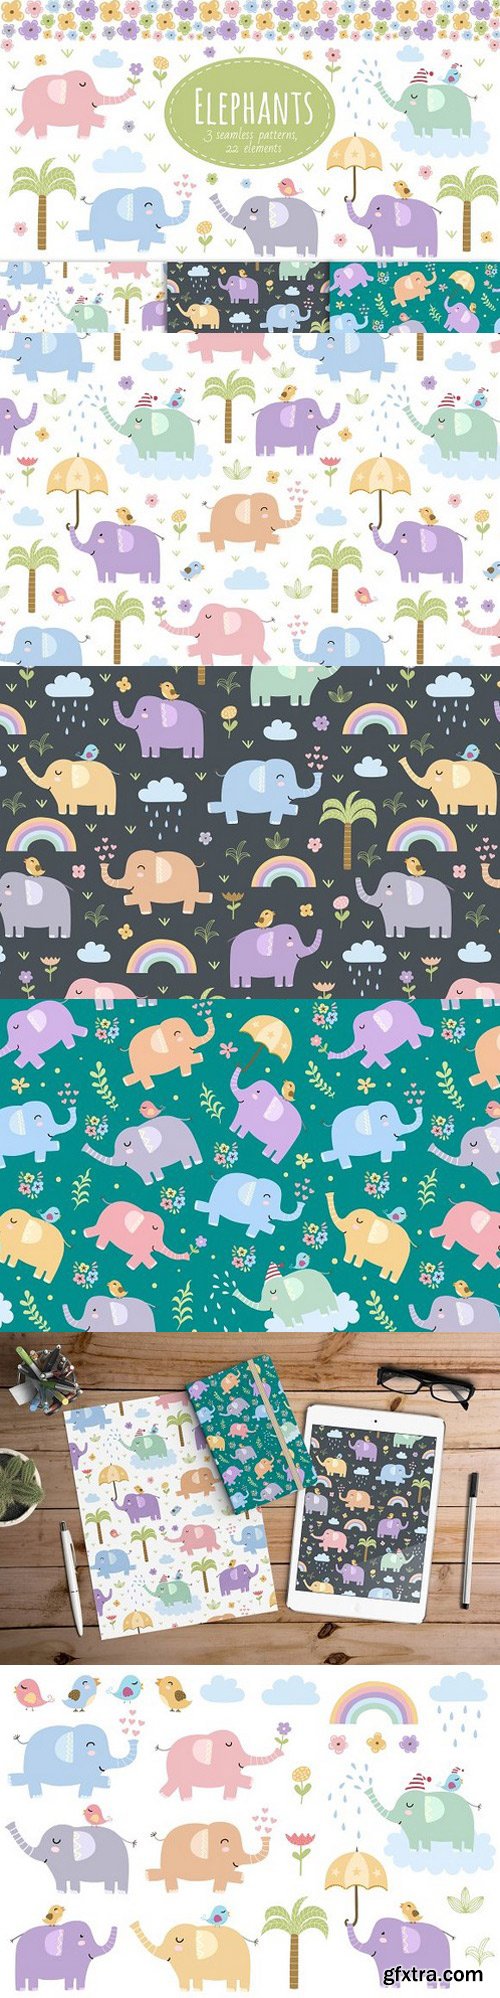 CM - Elephants: seamless patterns&clipart 985196